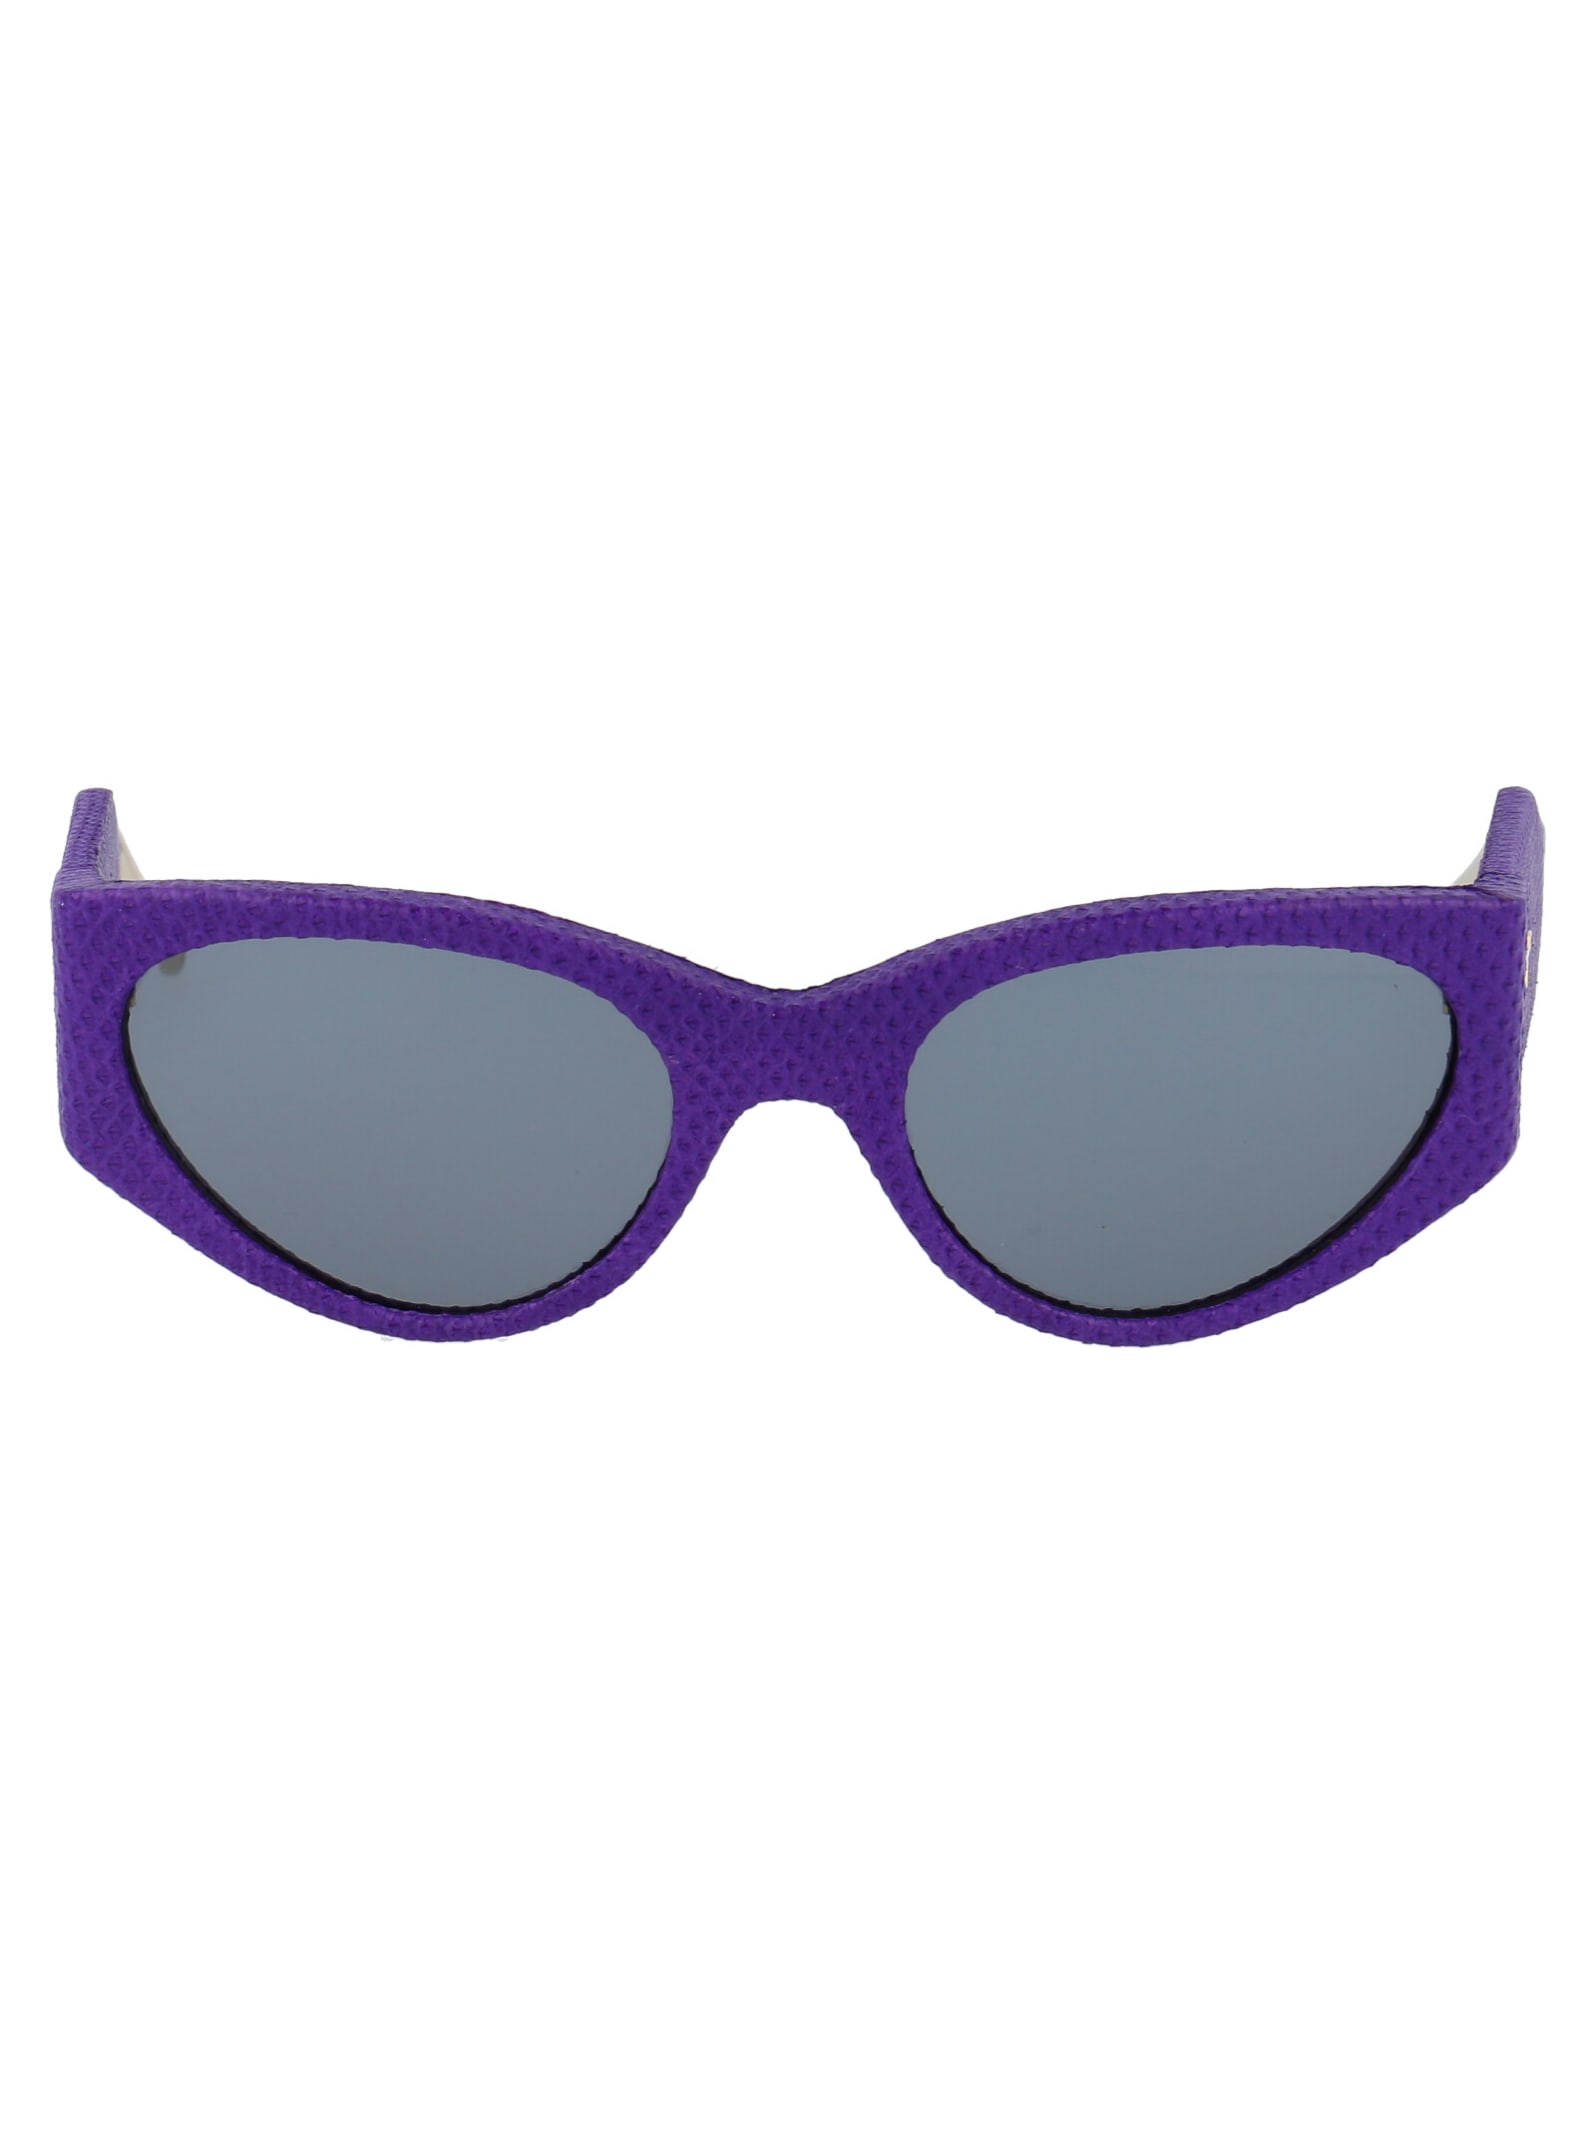 Salvatore Ferragamo Eyewear Sf950sl Sunglasses